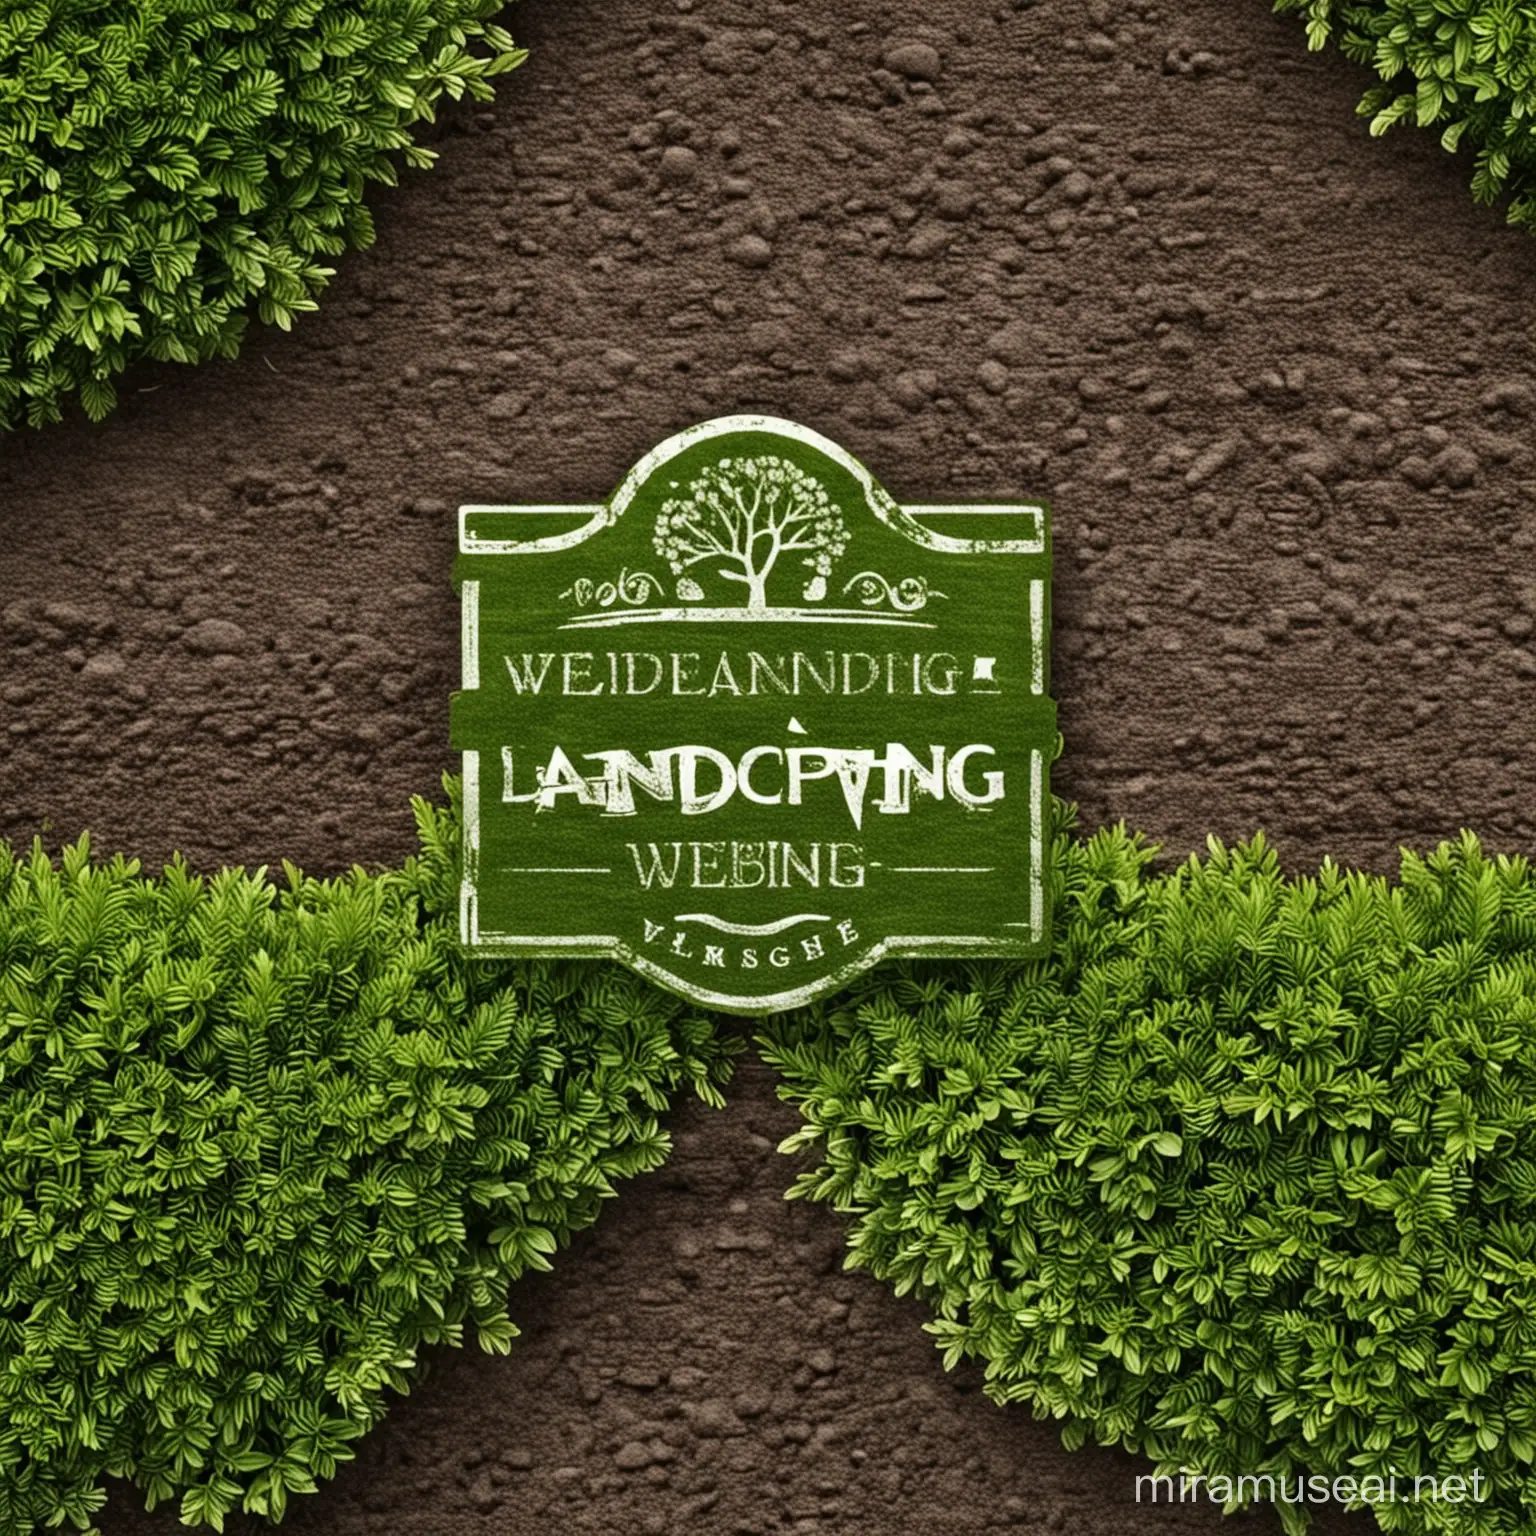 create a landscaping website logo
